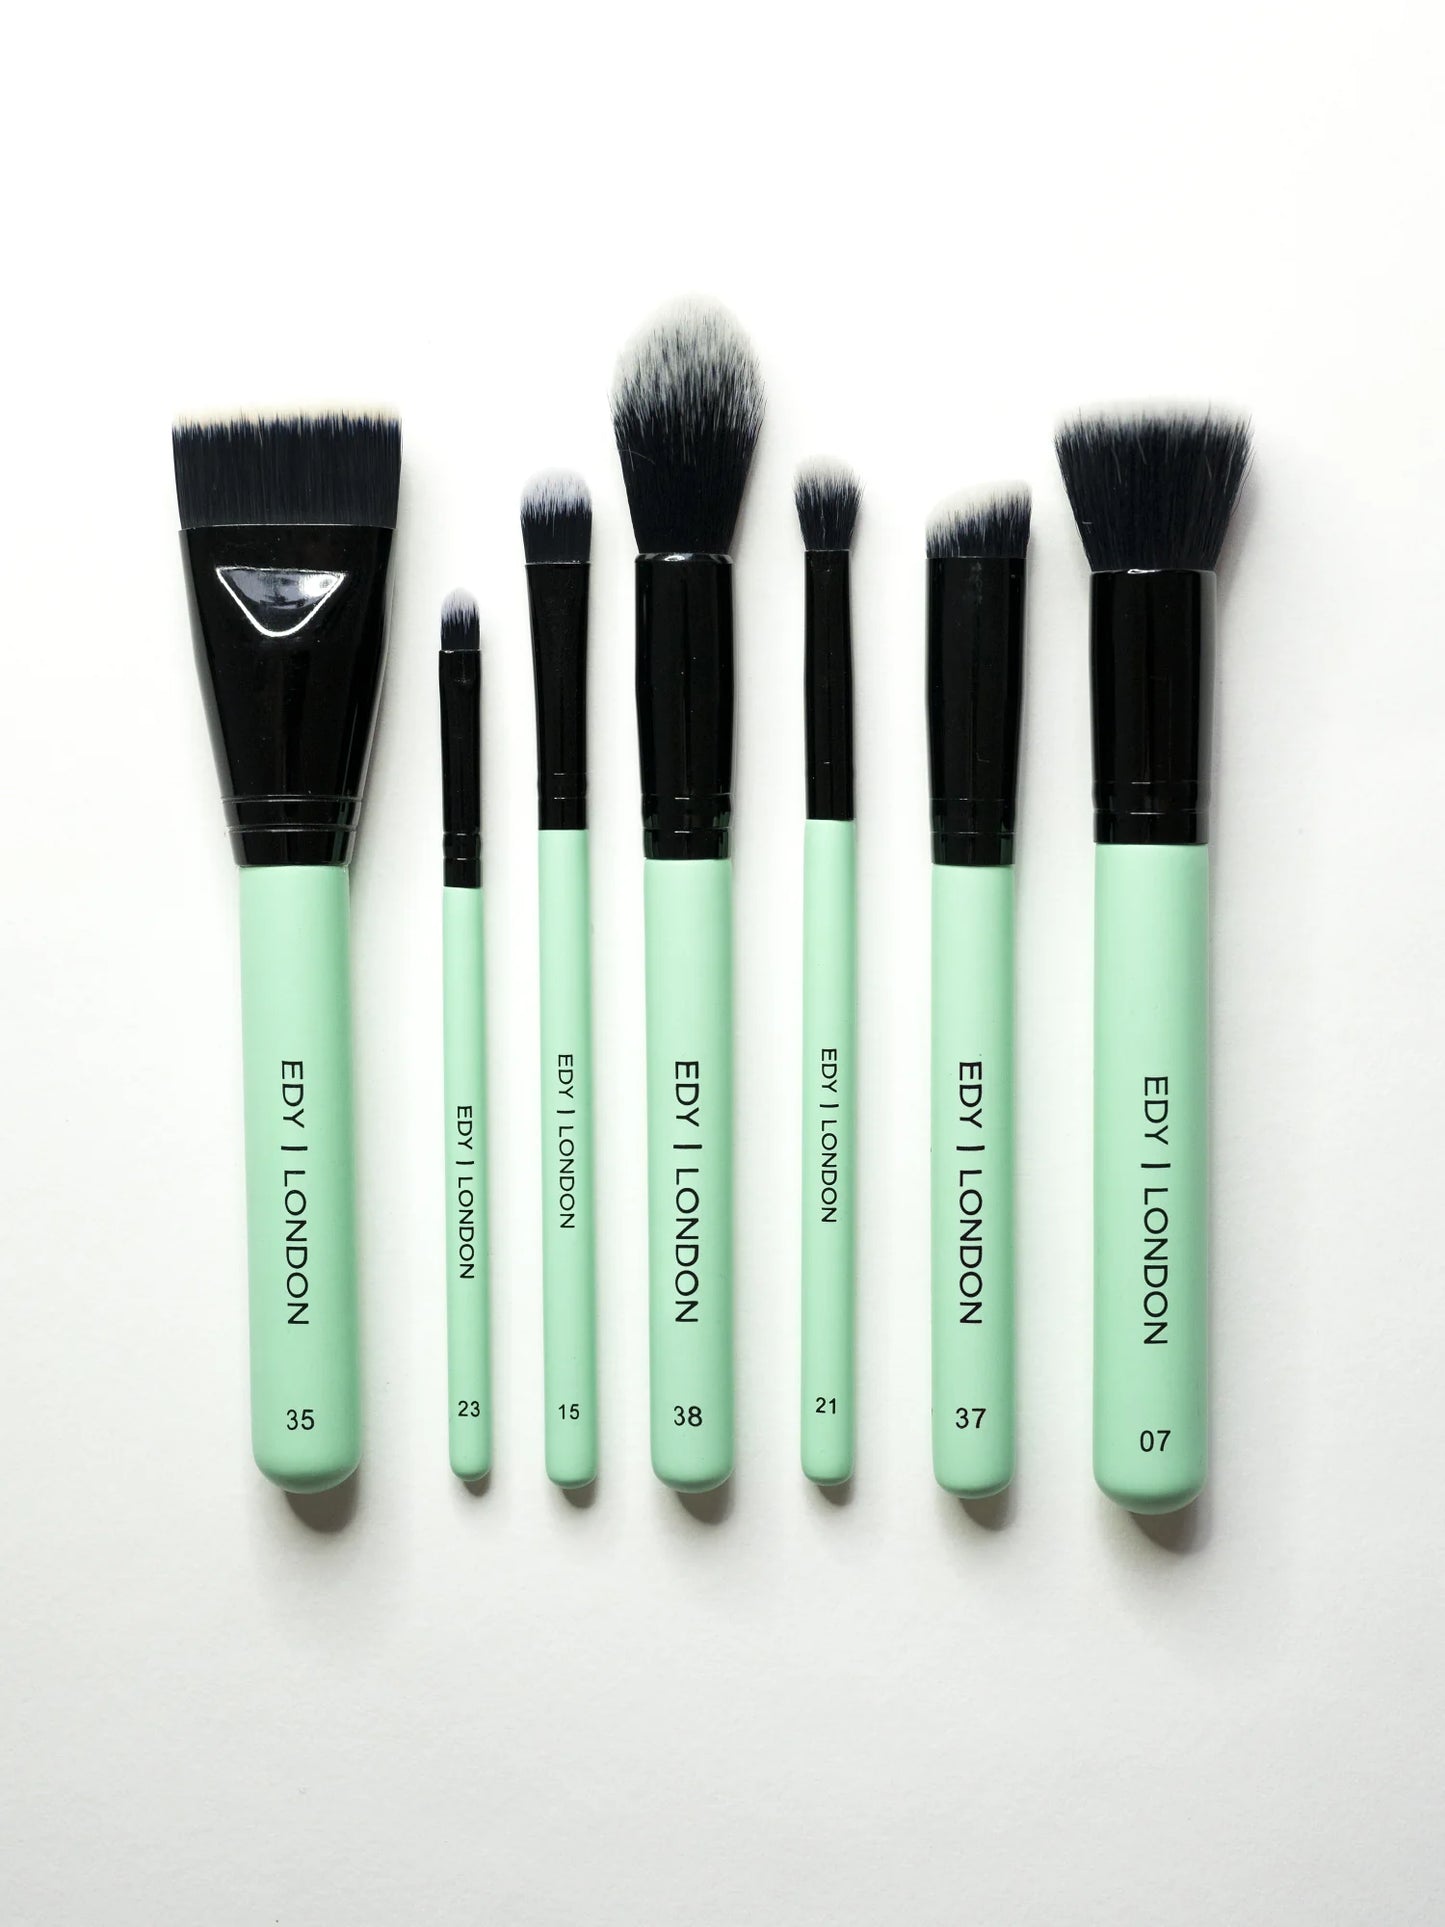 Like A Pro Set 511 Make-up Brush EDY LONDON Turquoise   - EDY LONDON PRODUCTS UK - The Best Makeup Brushes - shop.edy.london